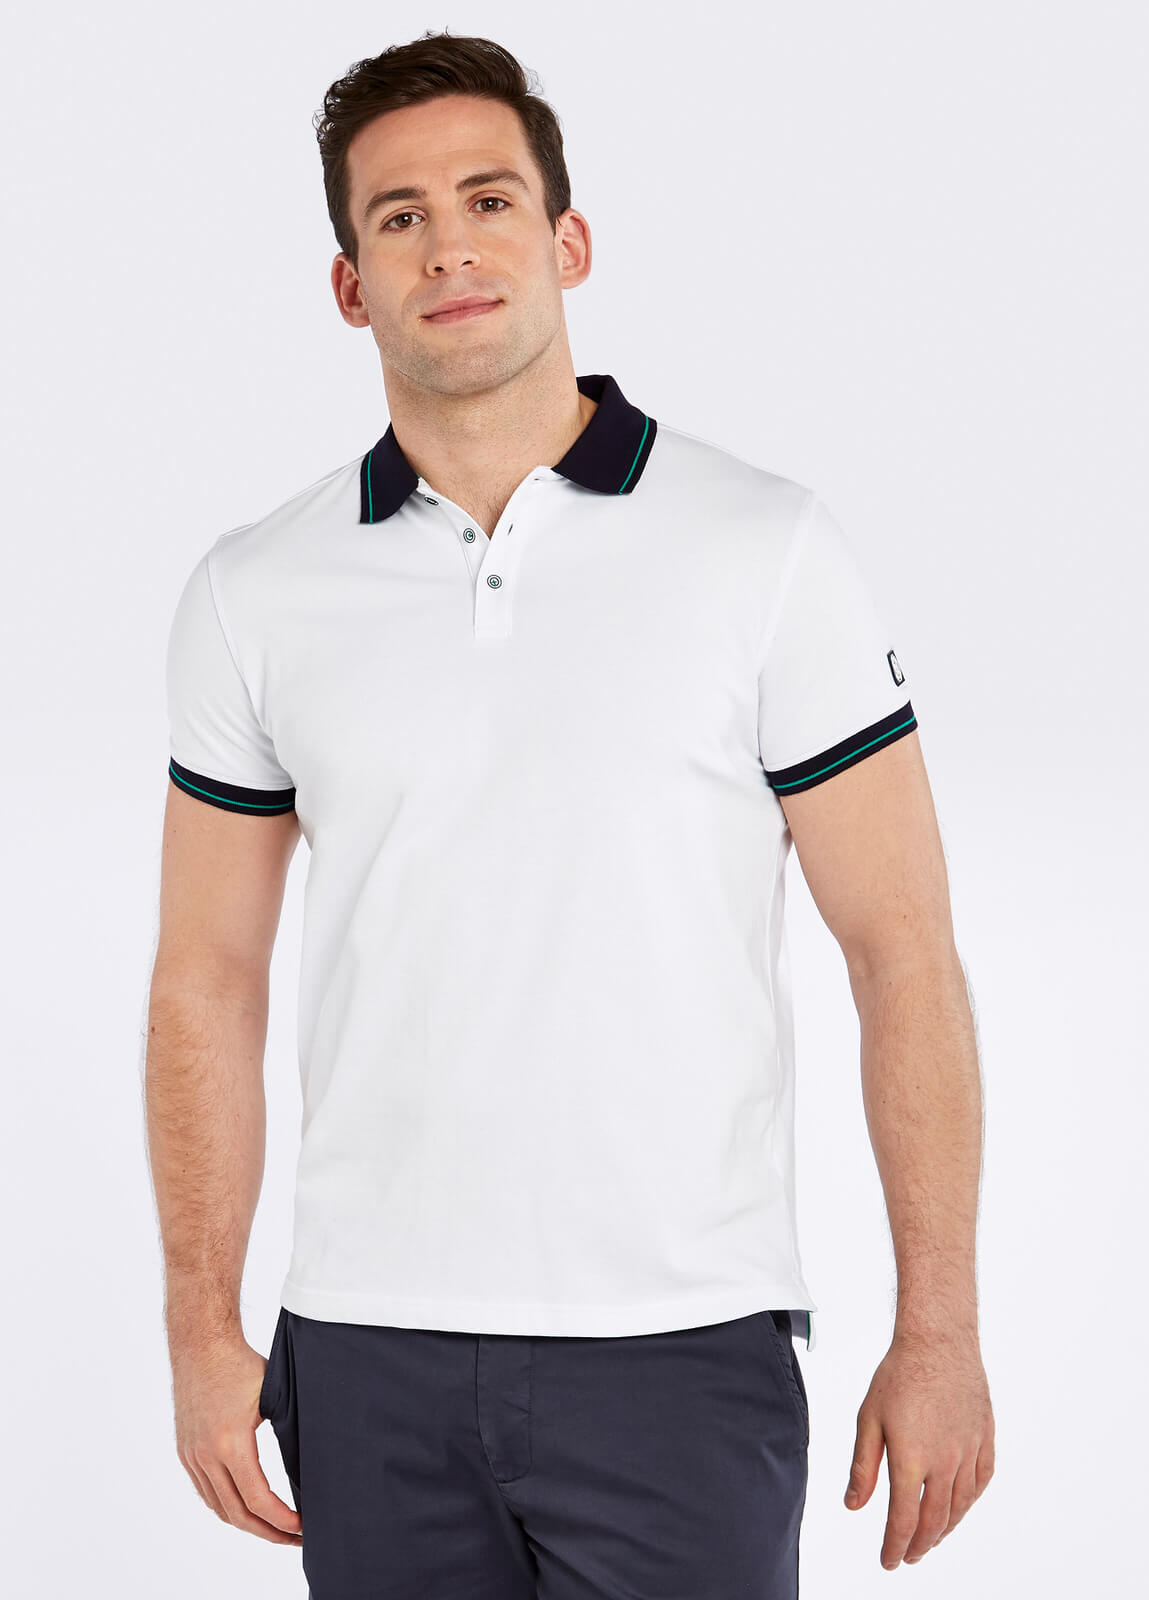 Grangeford Polo Shirt - White